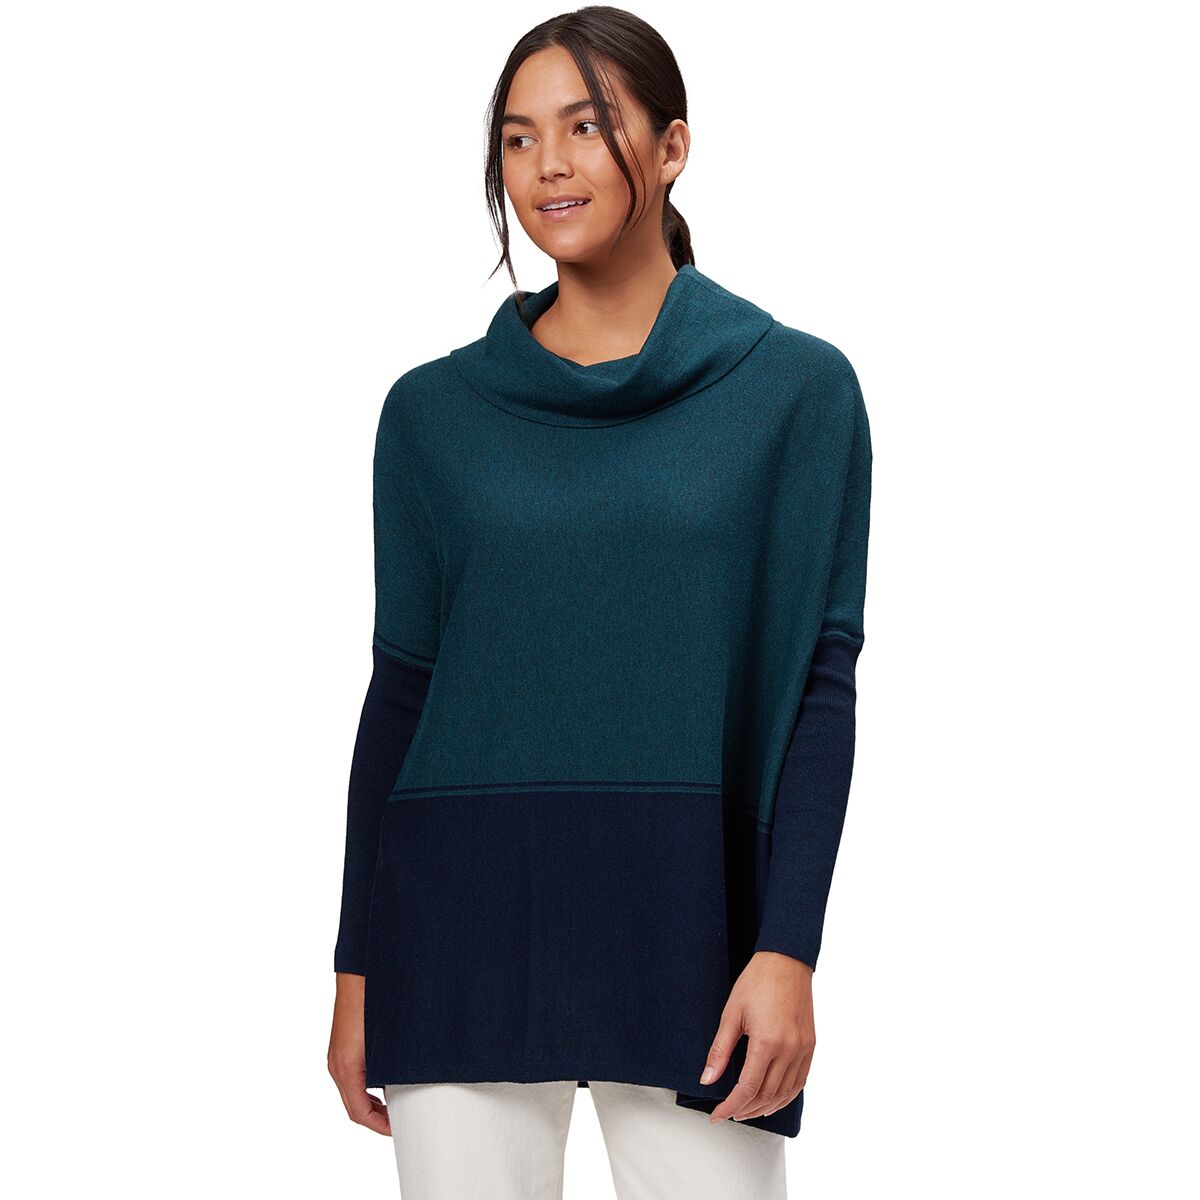 Edgewood Poncho Sweater - Women